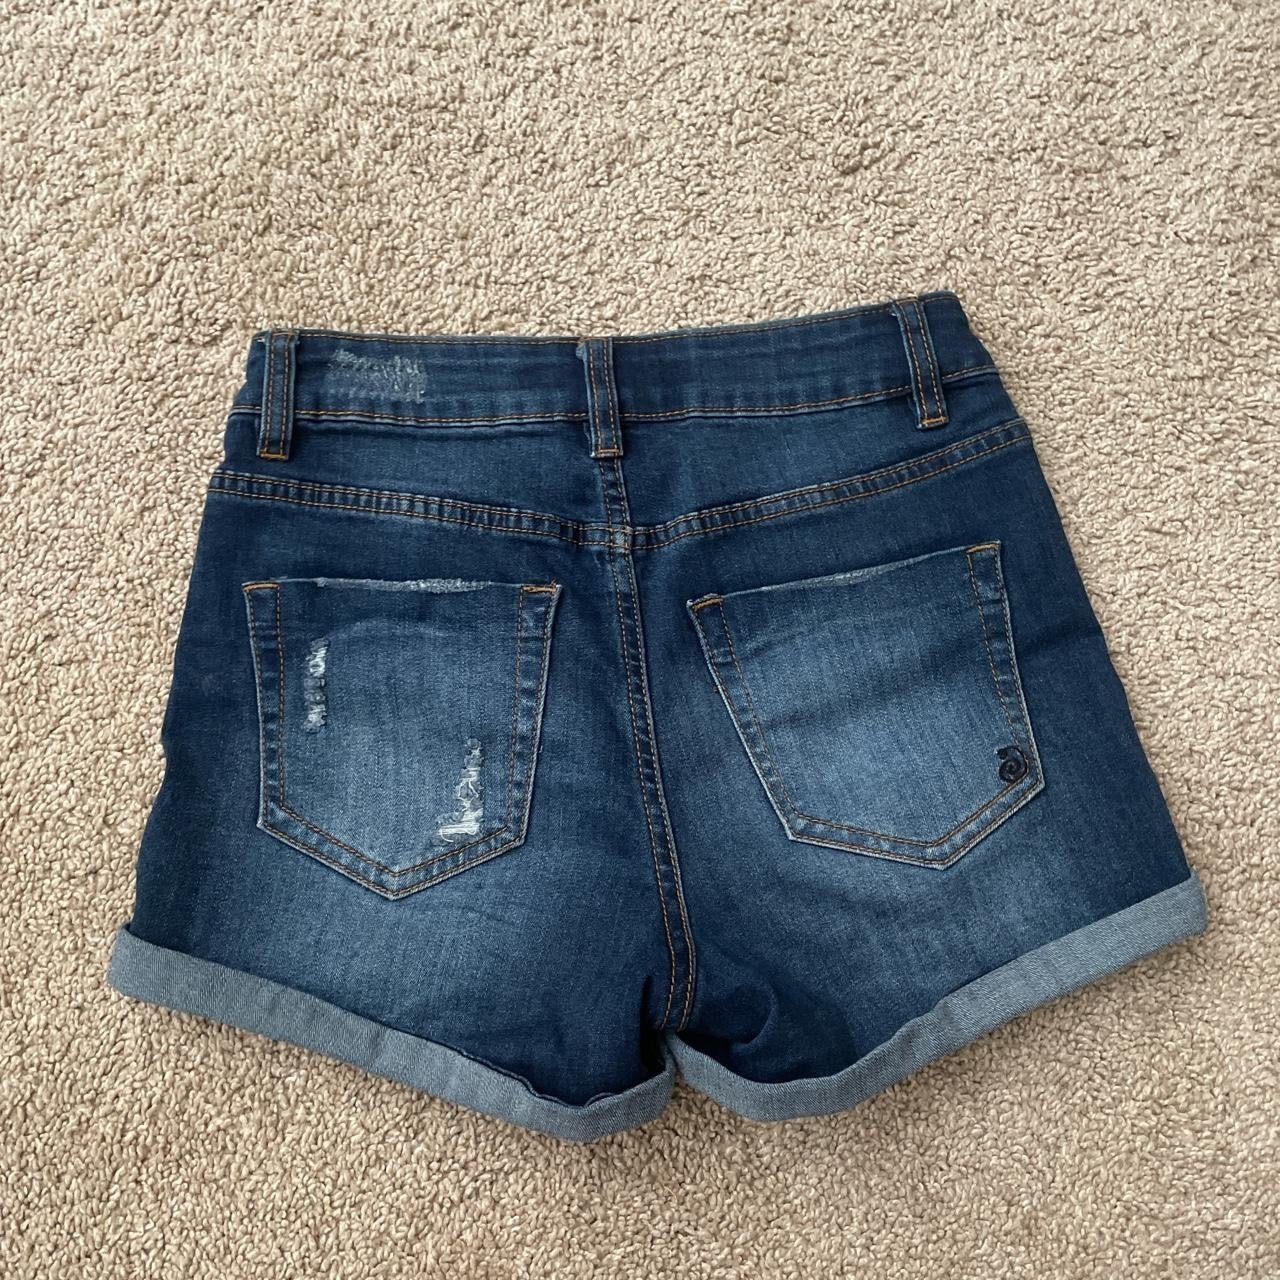 High quality Blue ripped jean shorts fKz63KEkr best sale